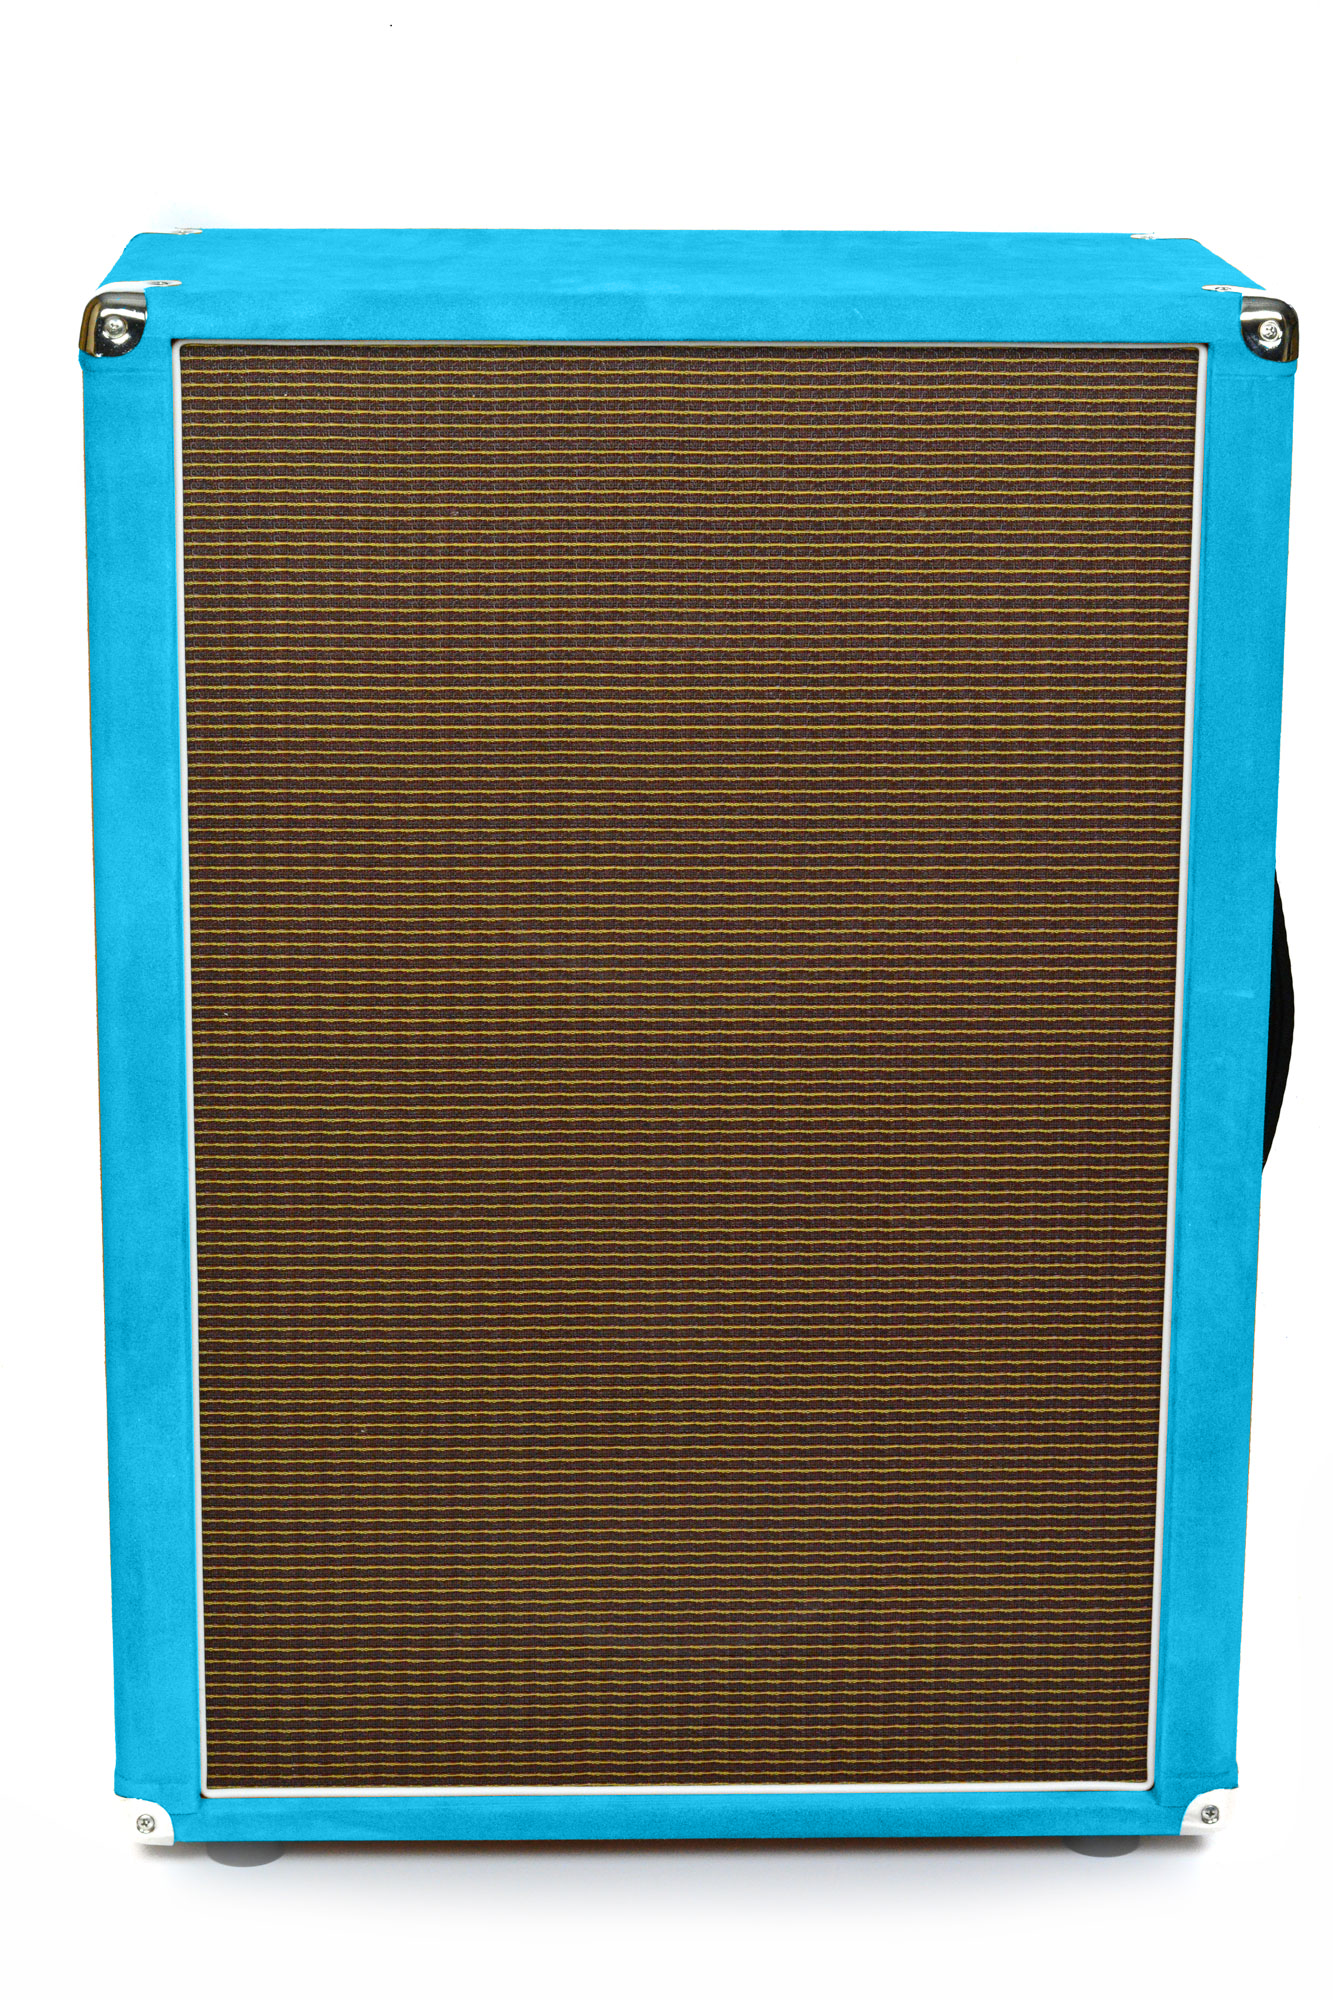 2 x 12 Vertical Speaker Cabinet w/Split Celestion (Creamback & G12-65)